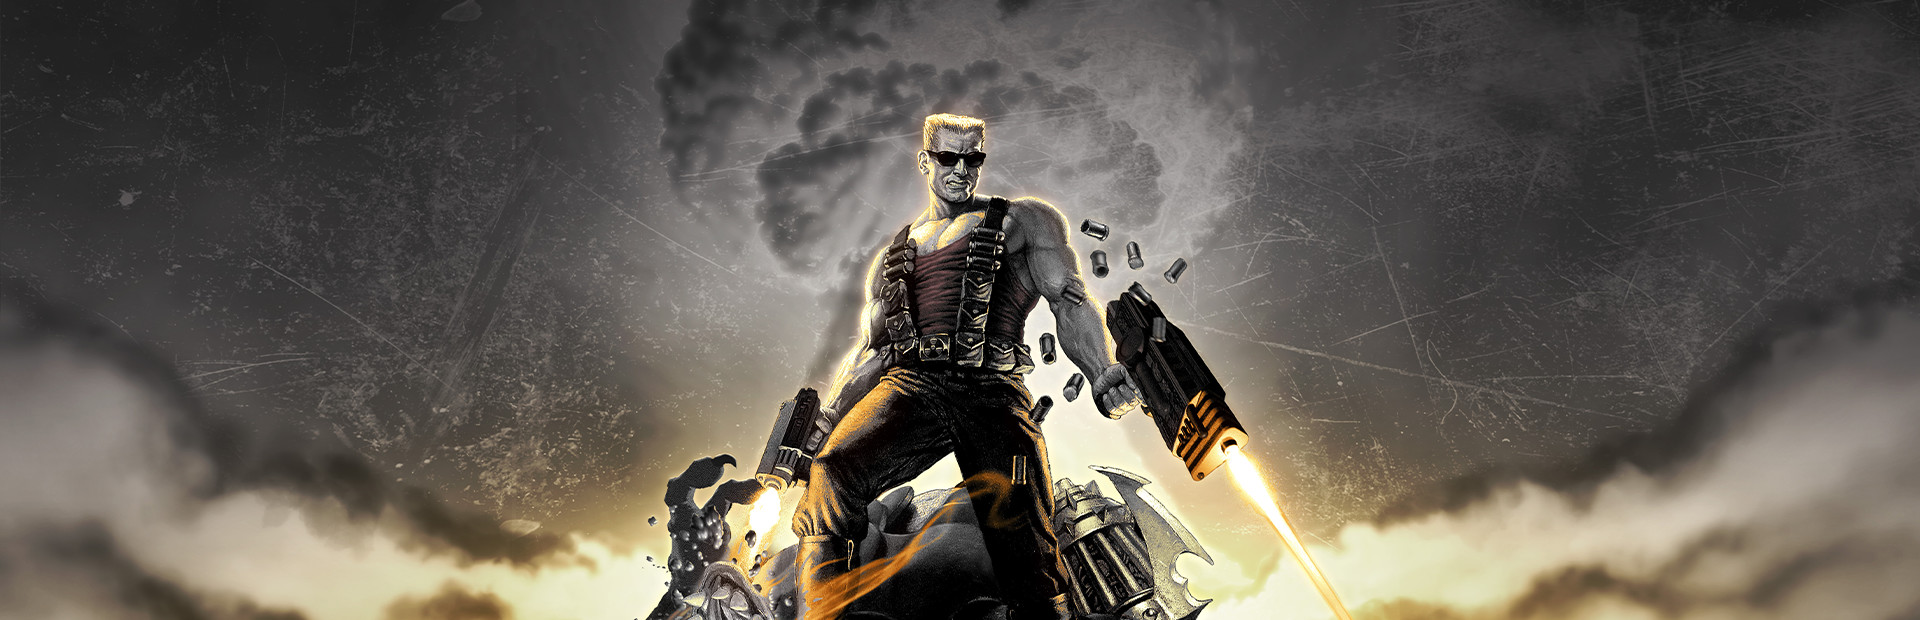 Duke Nukem 3D: 20th Anniversary World Tour cover image